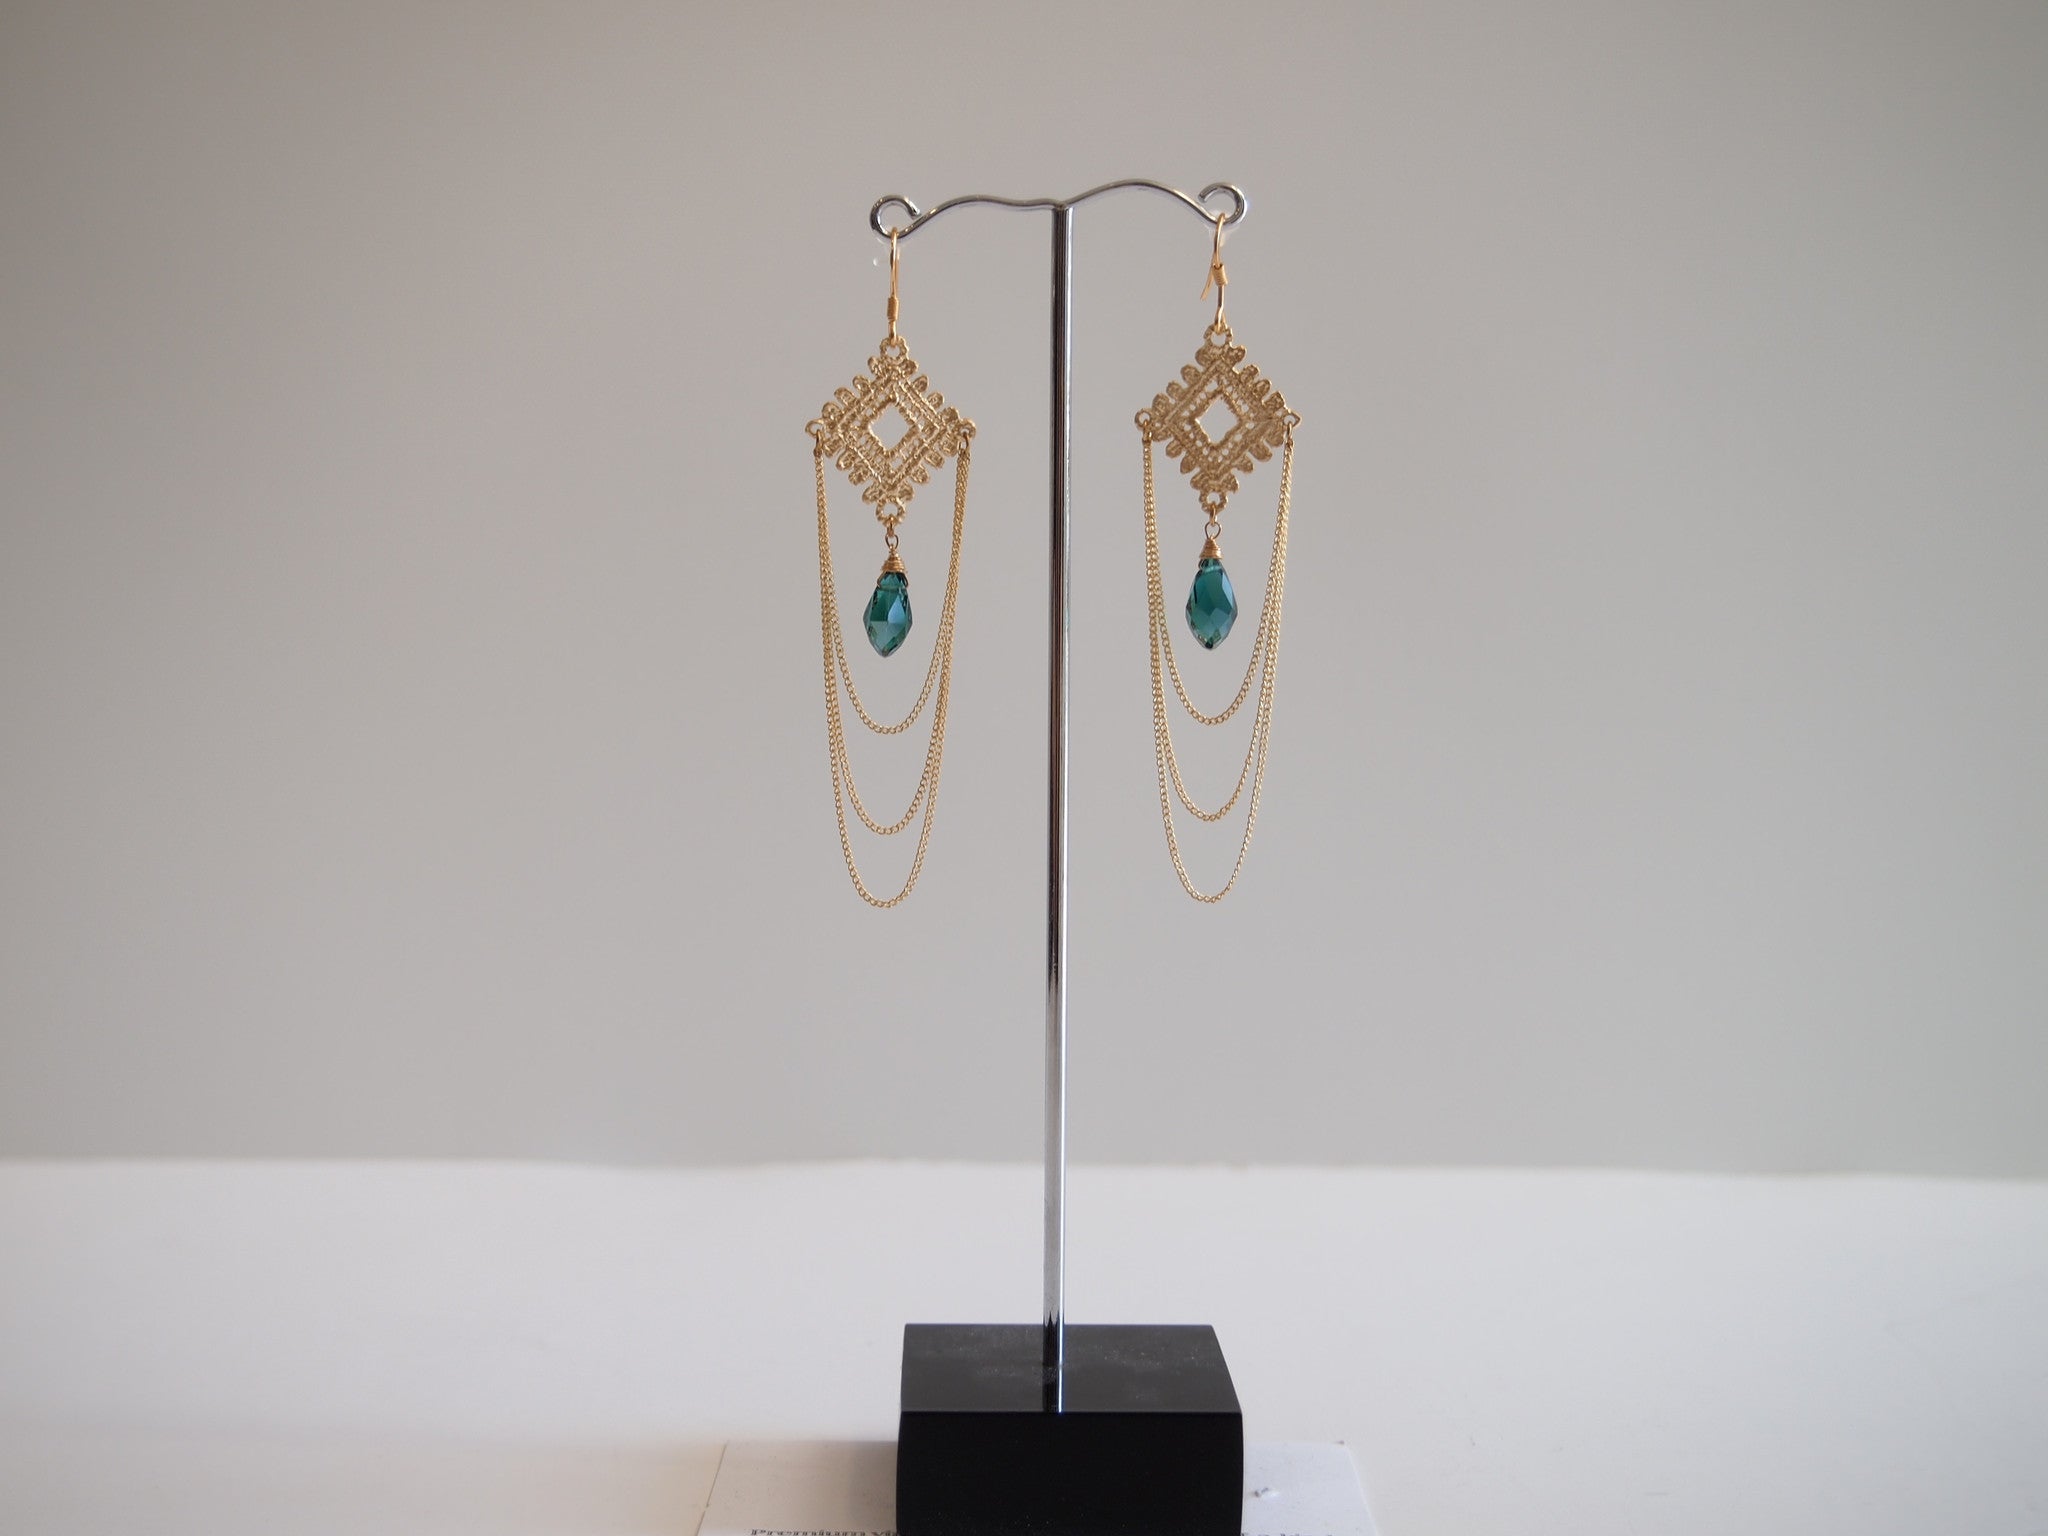 Handmade earrings with green quartz